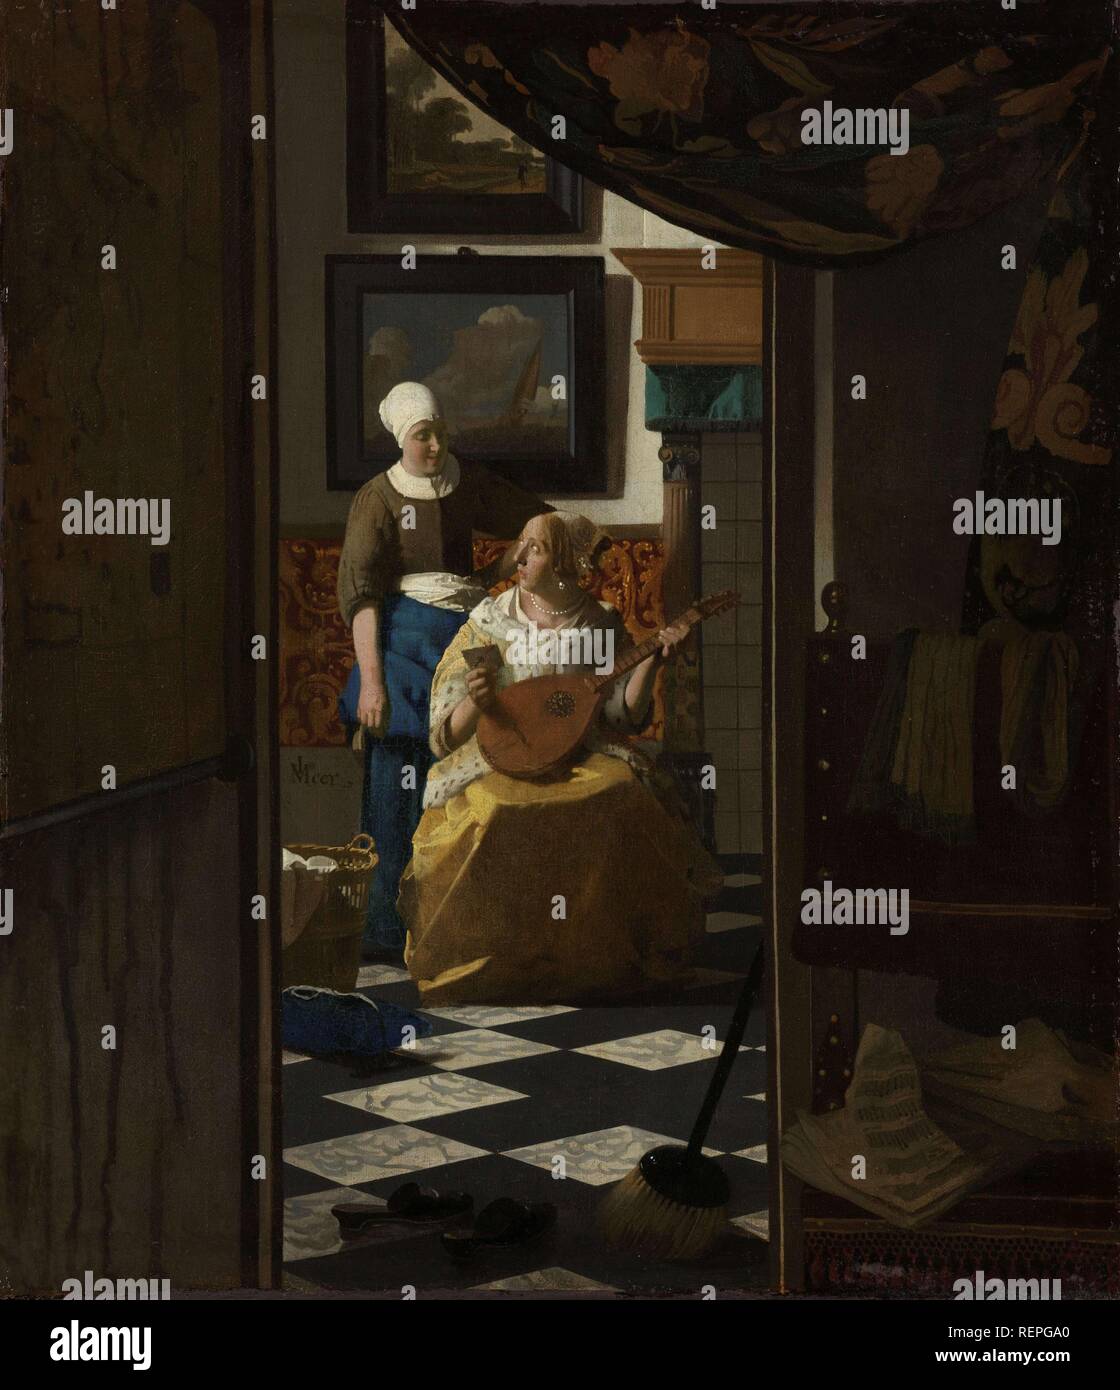 The Love Letter. Dating: c. 1669 - c. 1670. Measurements: h 44 cm × w 38.5 cm; h 68.5 cm × w 62.5 cm × t 7 cm; w 9 kg. Museum: Rijksmuseum, Amsterdam. Author: JOHANNES VERMEER. JAN VERMEER. Vermeer, Jan (Johannes). Stock Photo